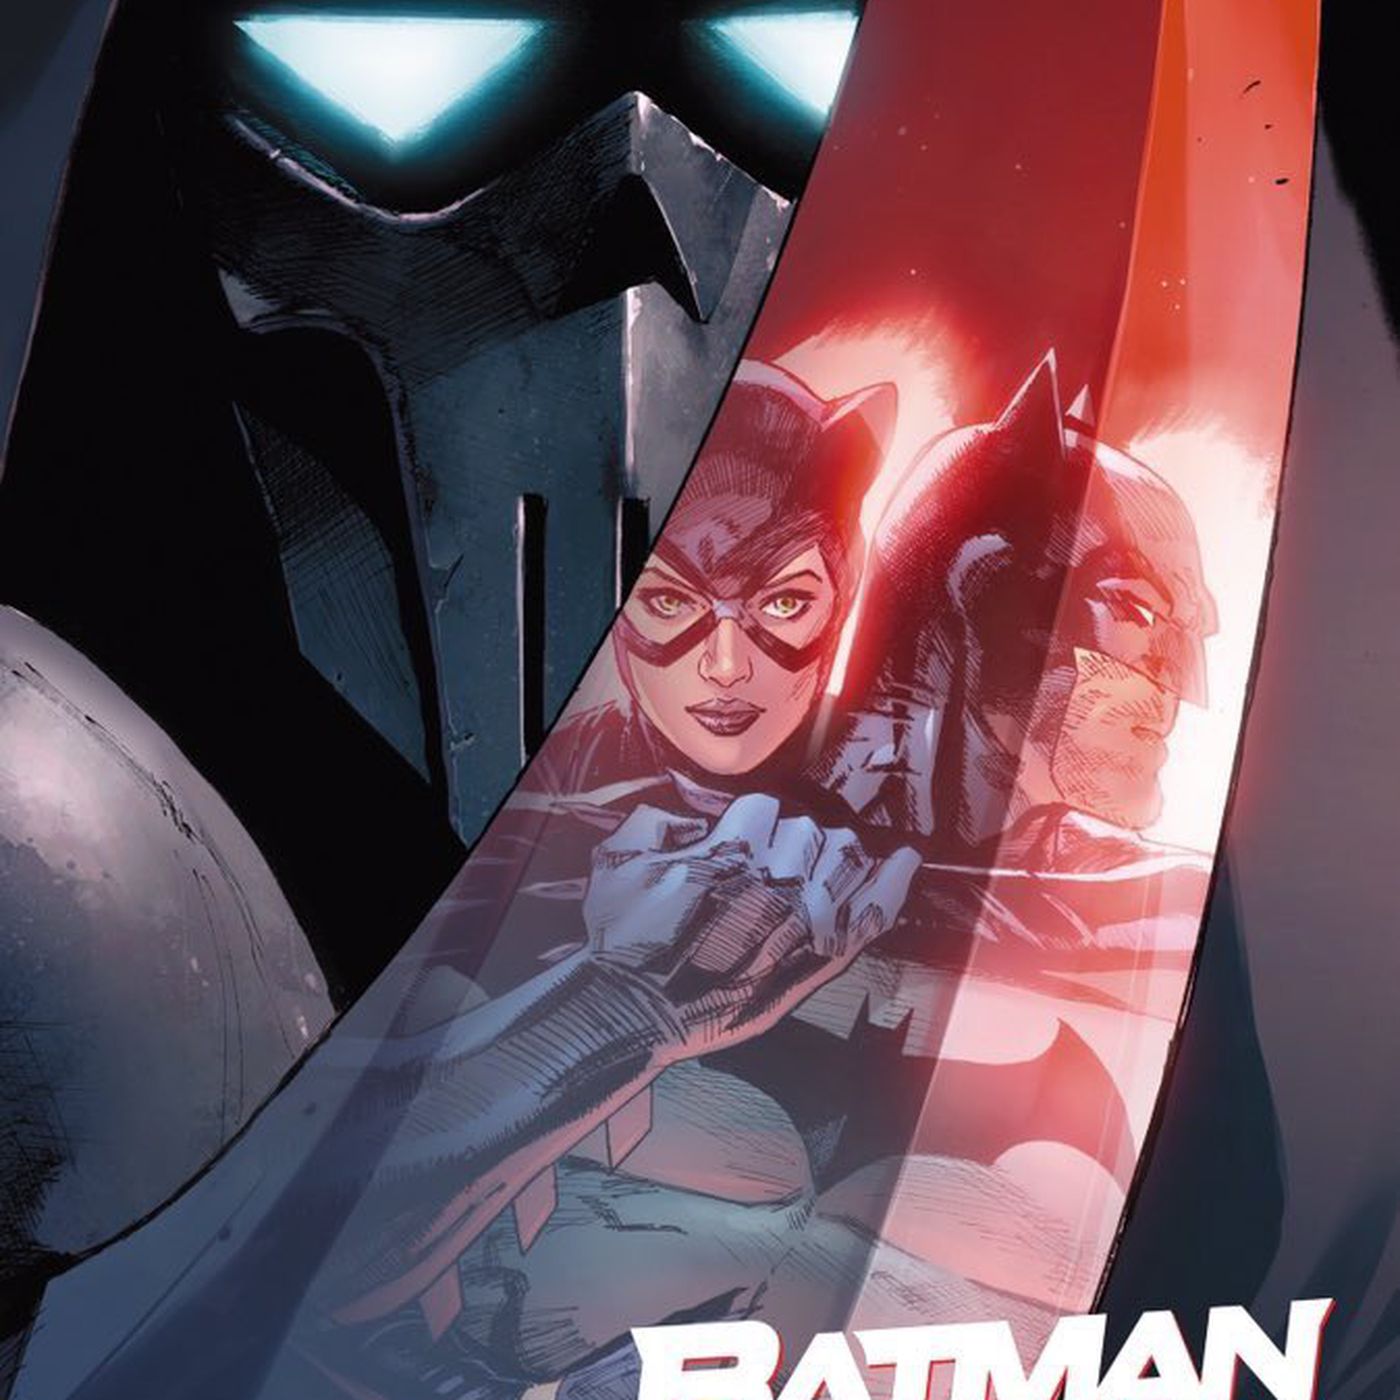 Mask of the Phantasm's villain is coming to Tom King's Batman series